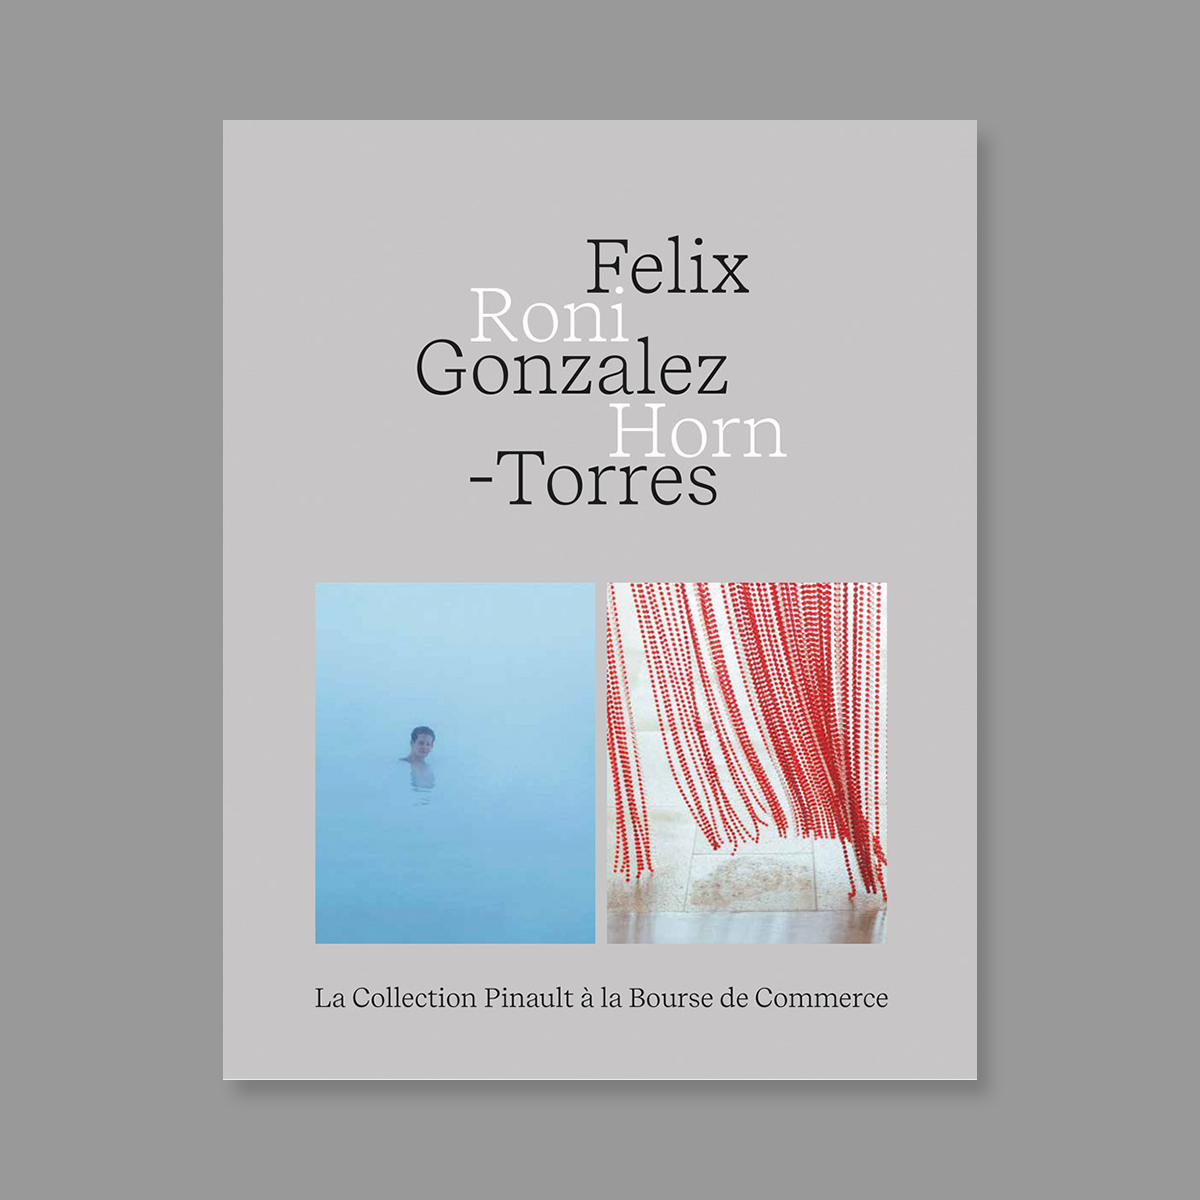 Front cover of Felix Gonzalez-Torres - Roni Horn